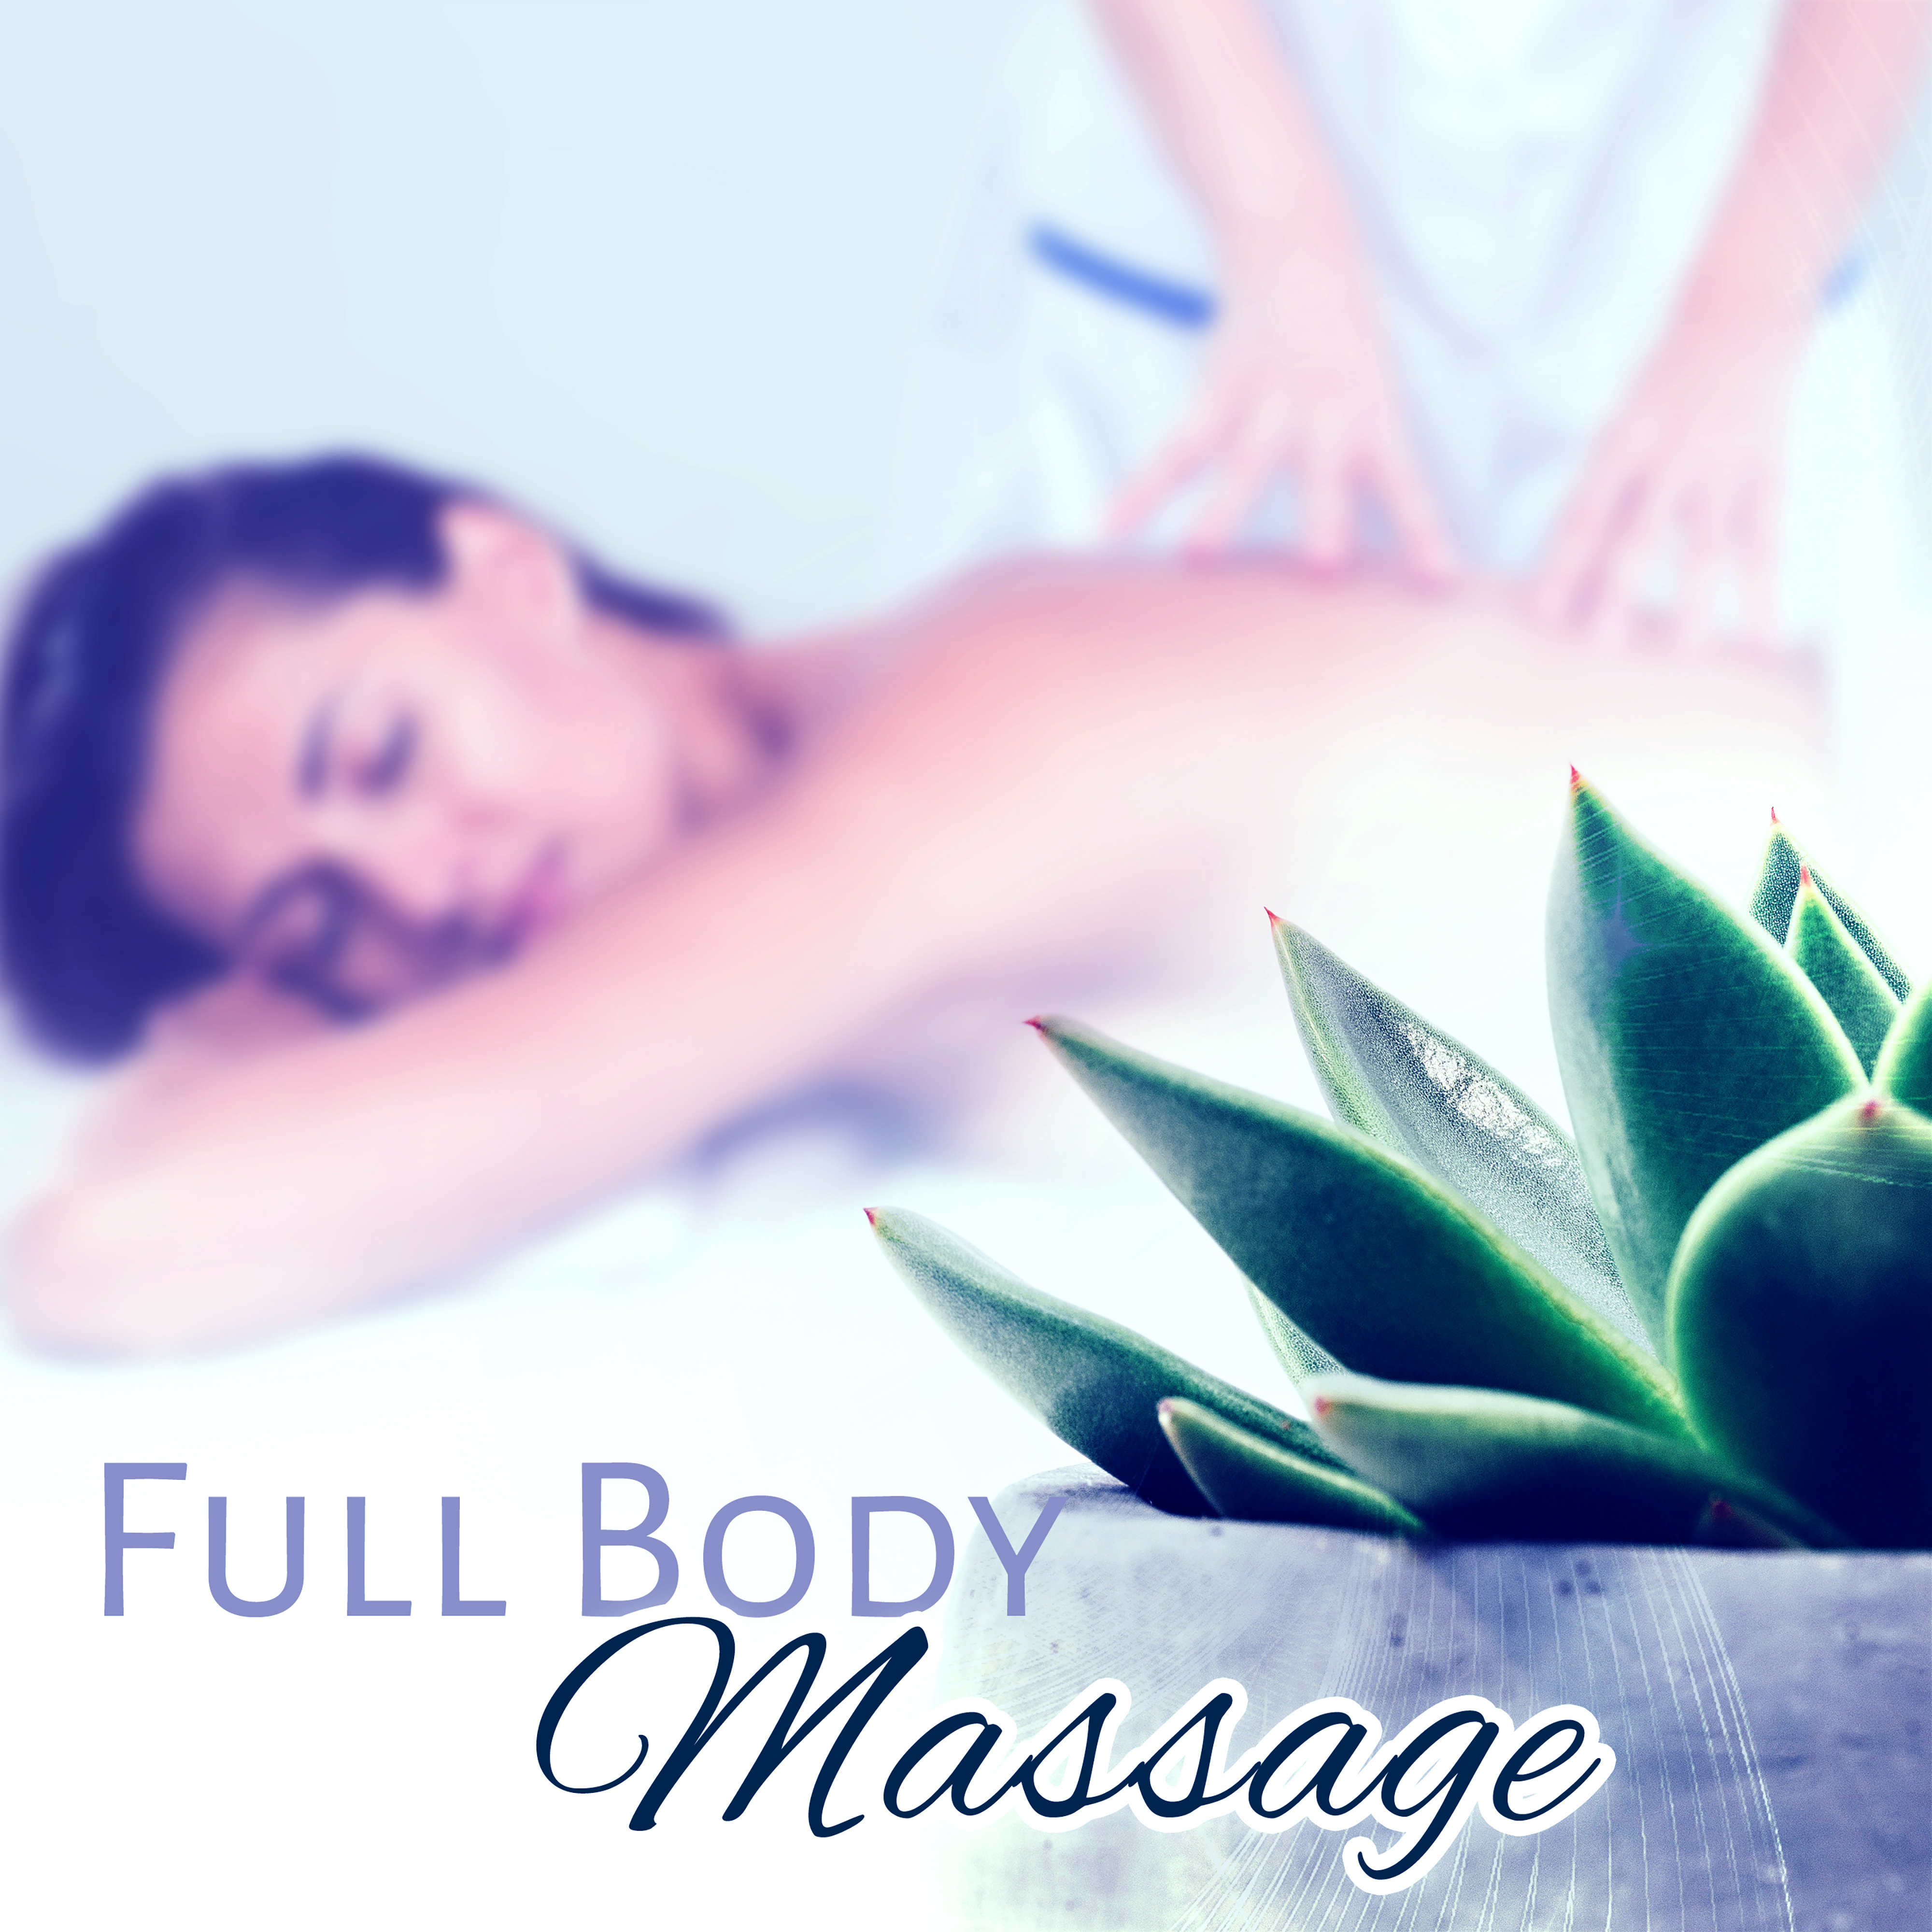 Full Body Massage  Calming Nature Sounds, Spa Music, Wellness, New Age for Spa, Zen Music for Healing Massage, Instrumental Music